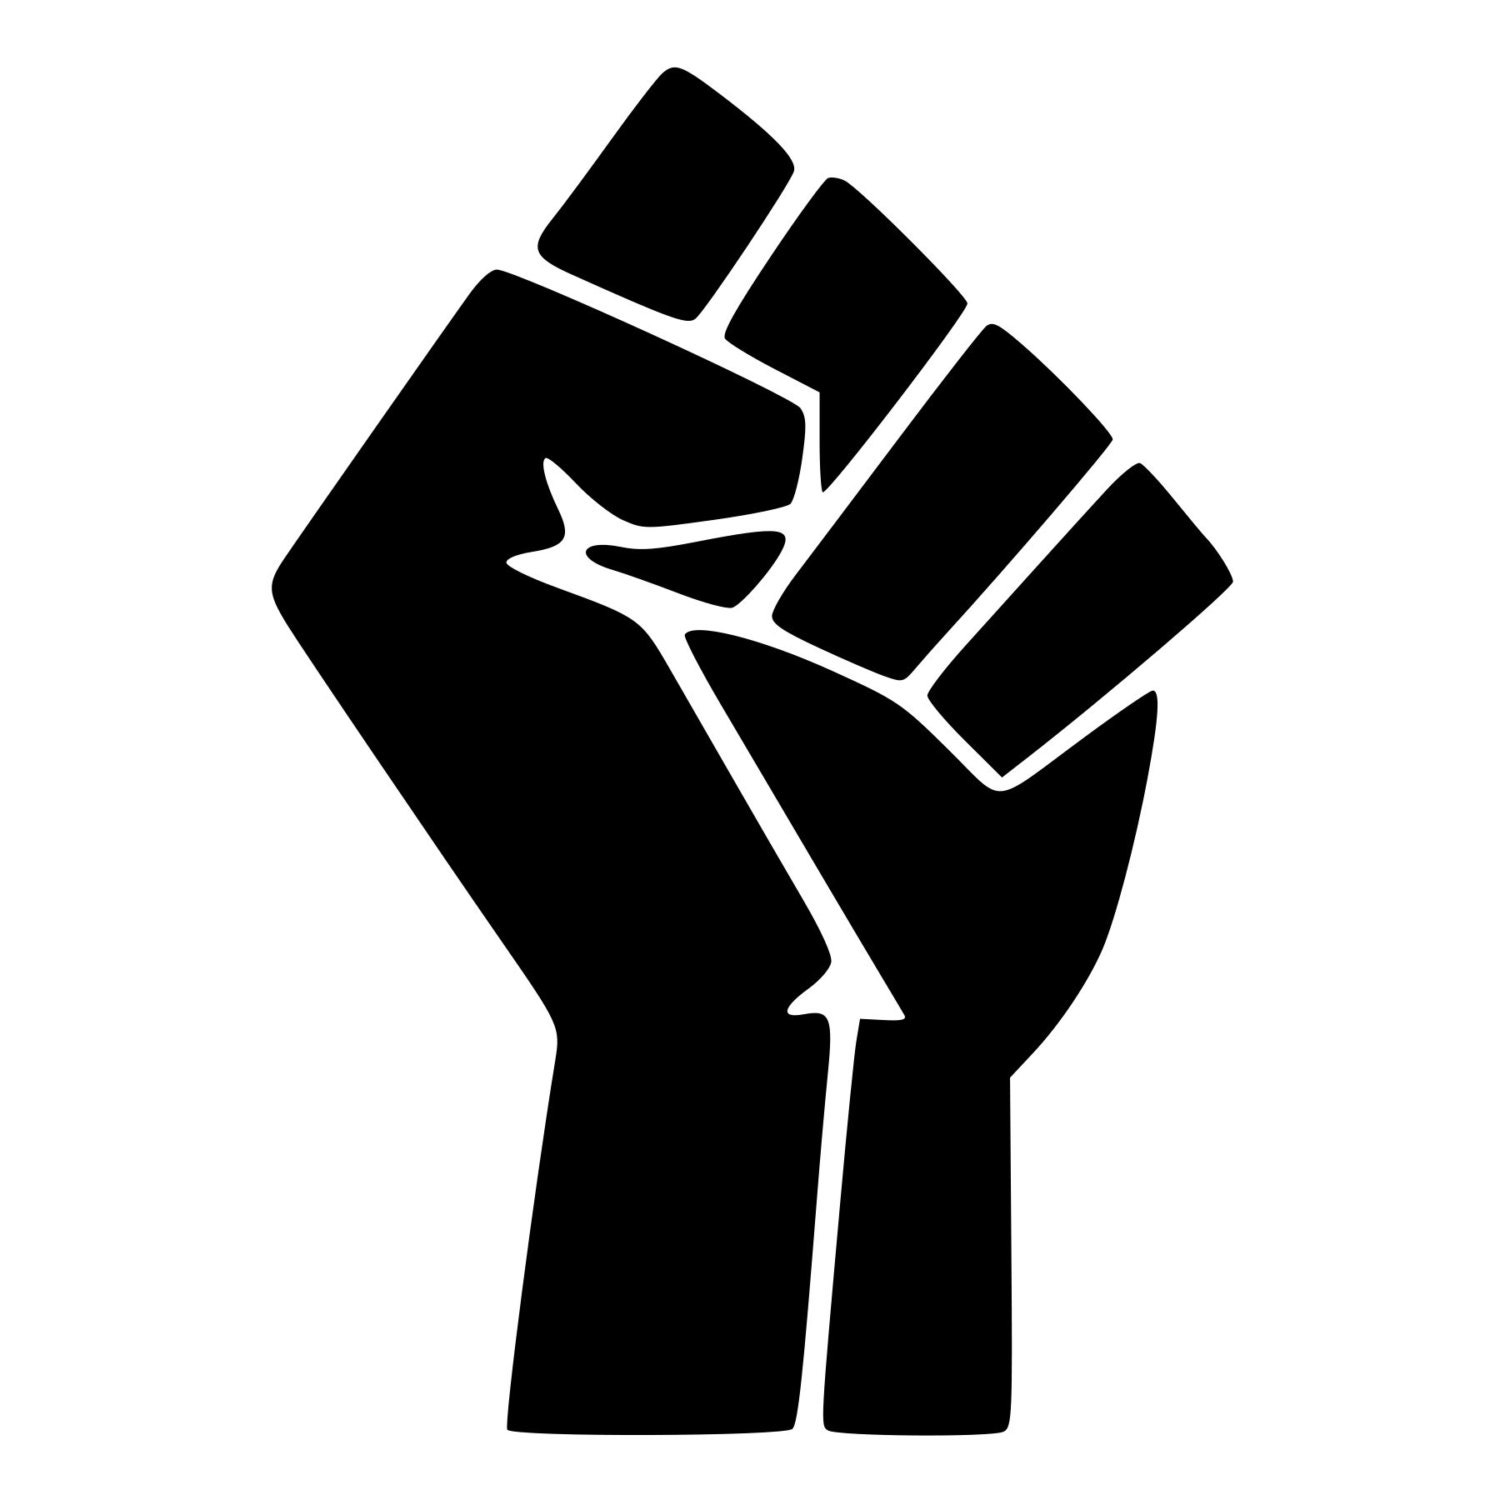  Black Lives Matter symbol 'fist'